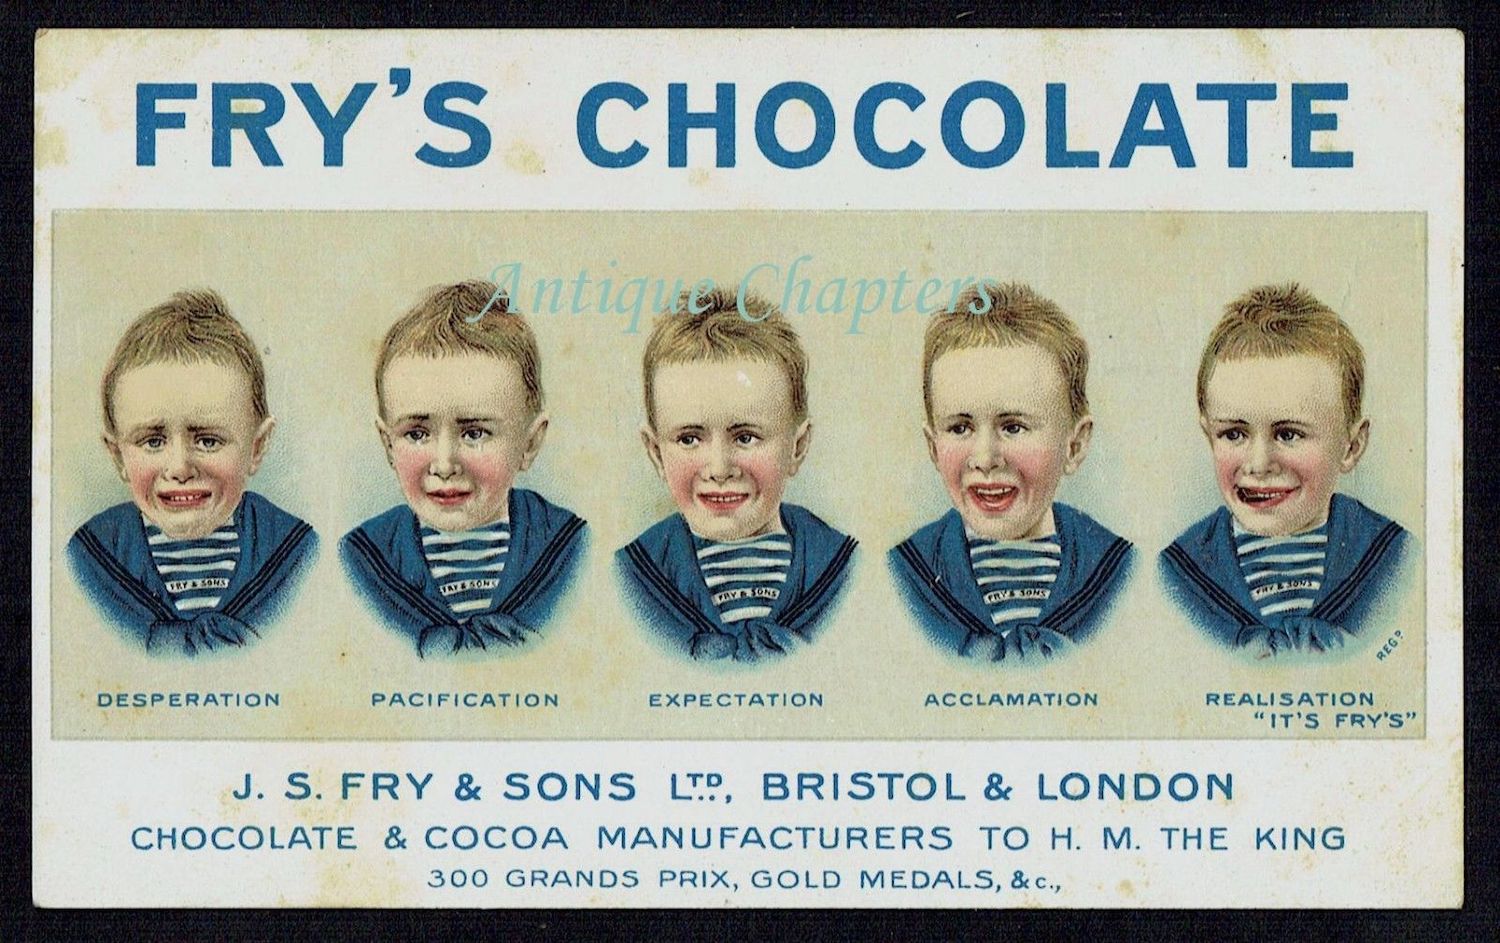 Joseph Fry, l’industriel Quaker qui inventa la tablette de chocolat